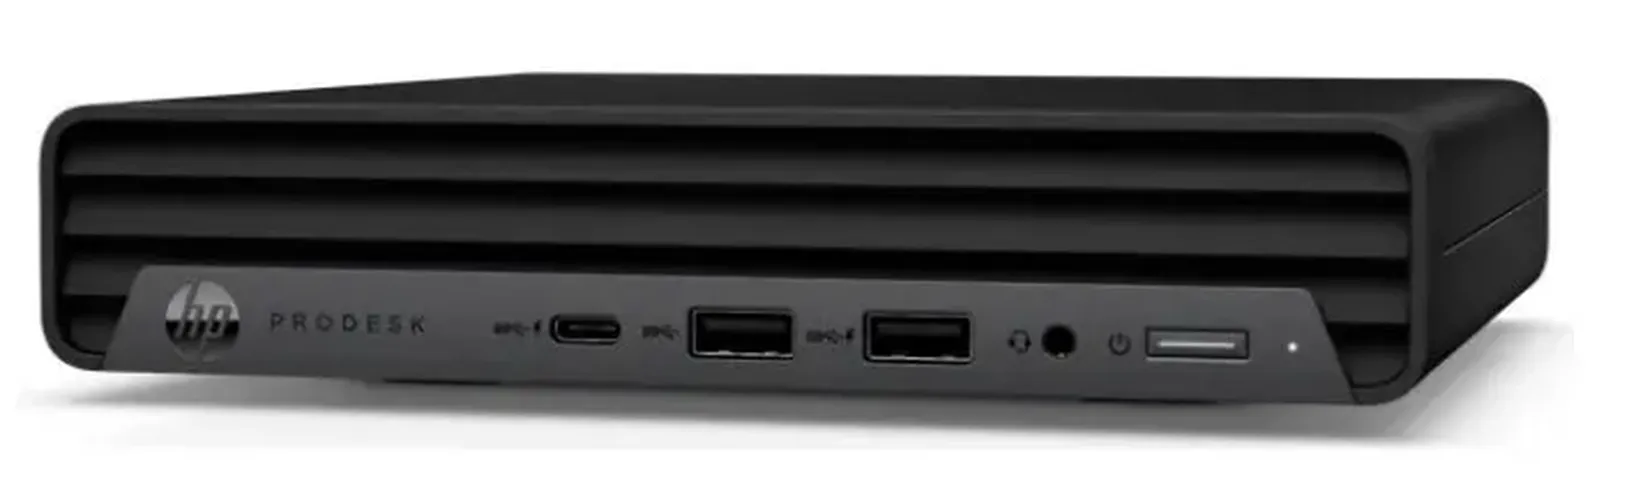 Мини ПК HP  PRODESK 400 G6 |i3-10100| 8Gb DDR4| SSD 256Gb, Черный, фото